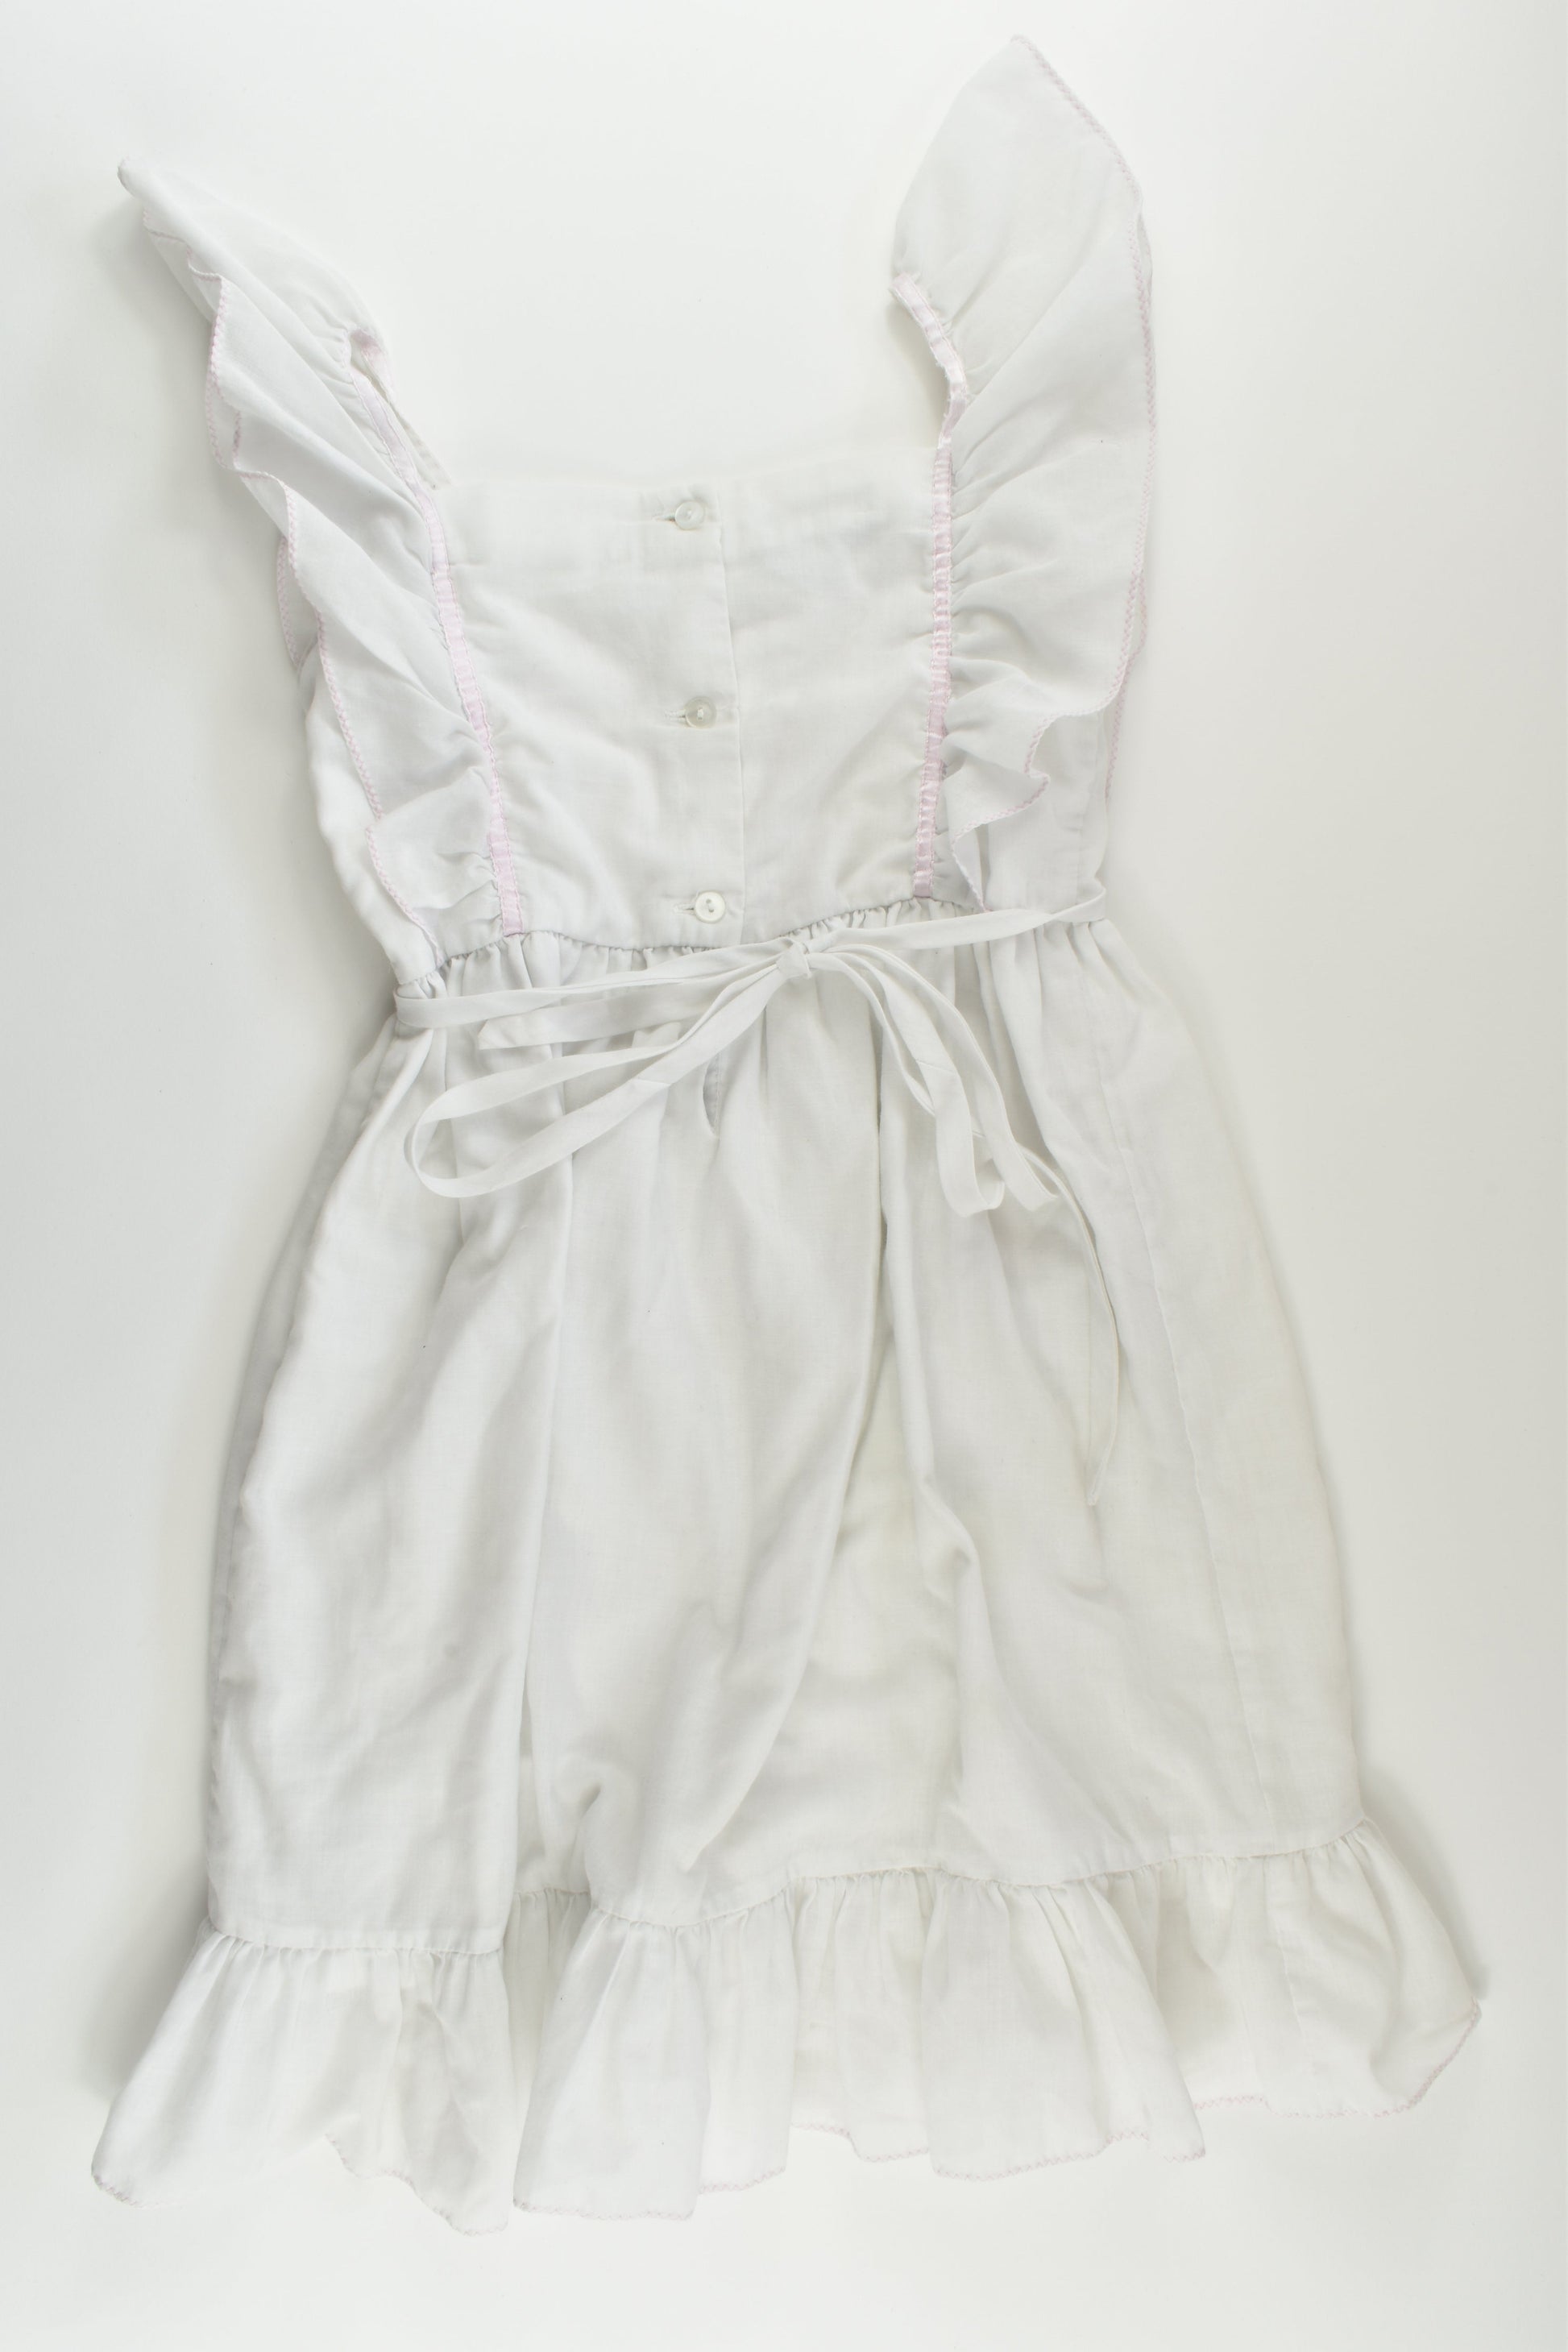 Annarella Size approx 7-8 Vintage Dress